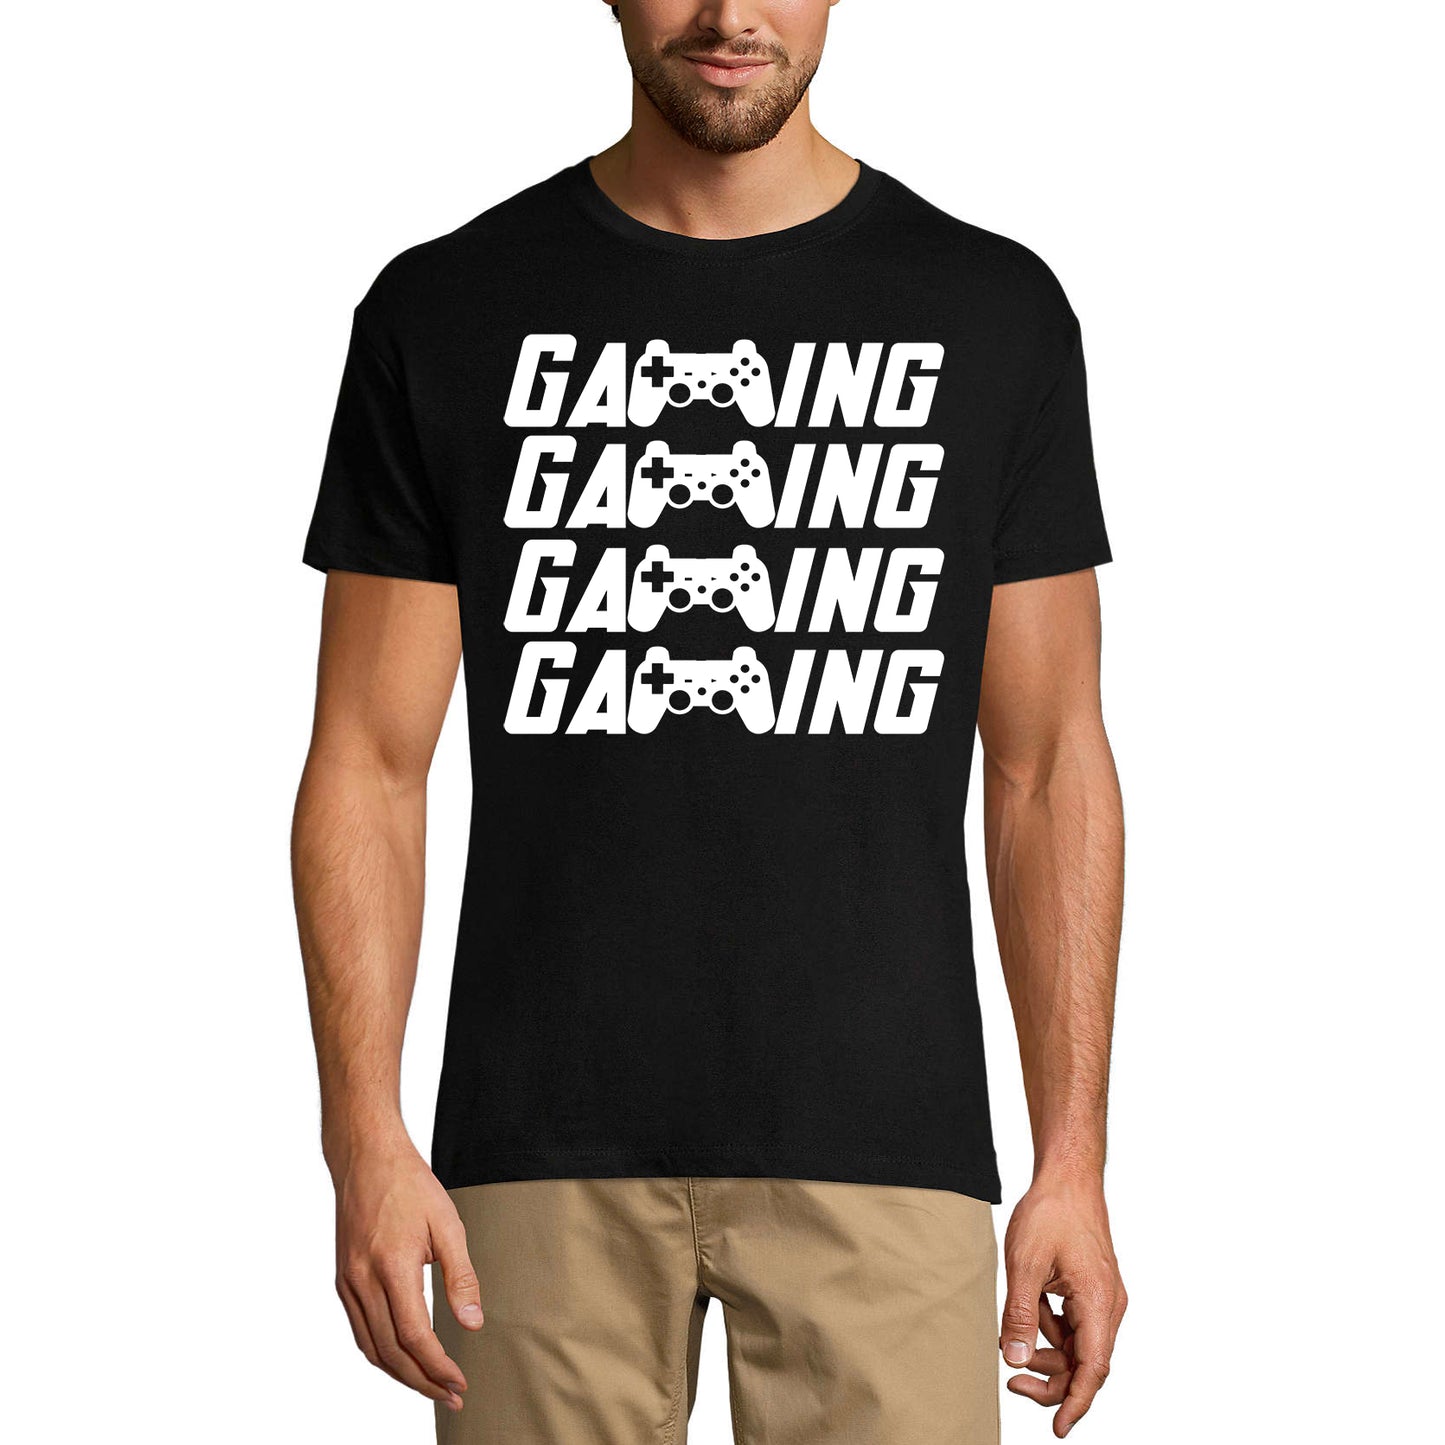 ULTRABASIC Men's Gaming T-Shirt - Game Mode On - Funny Humor Vintage Gamer Shirt